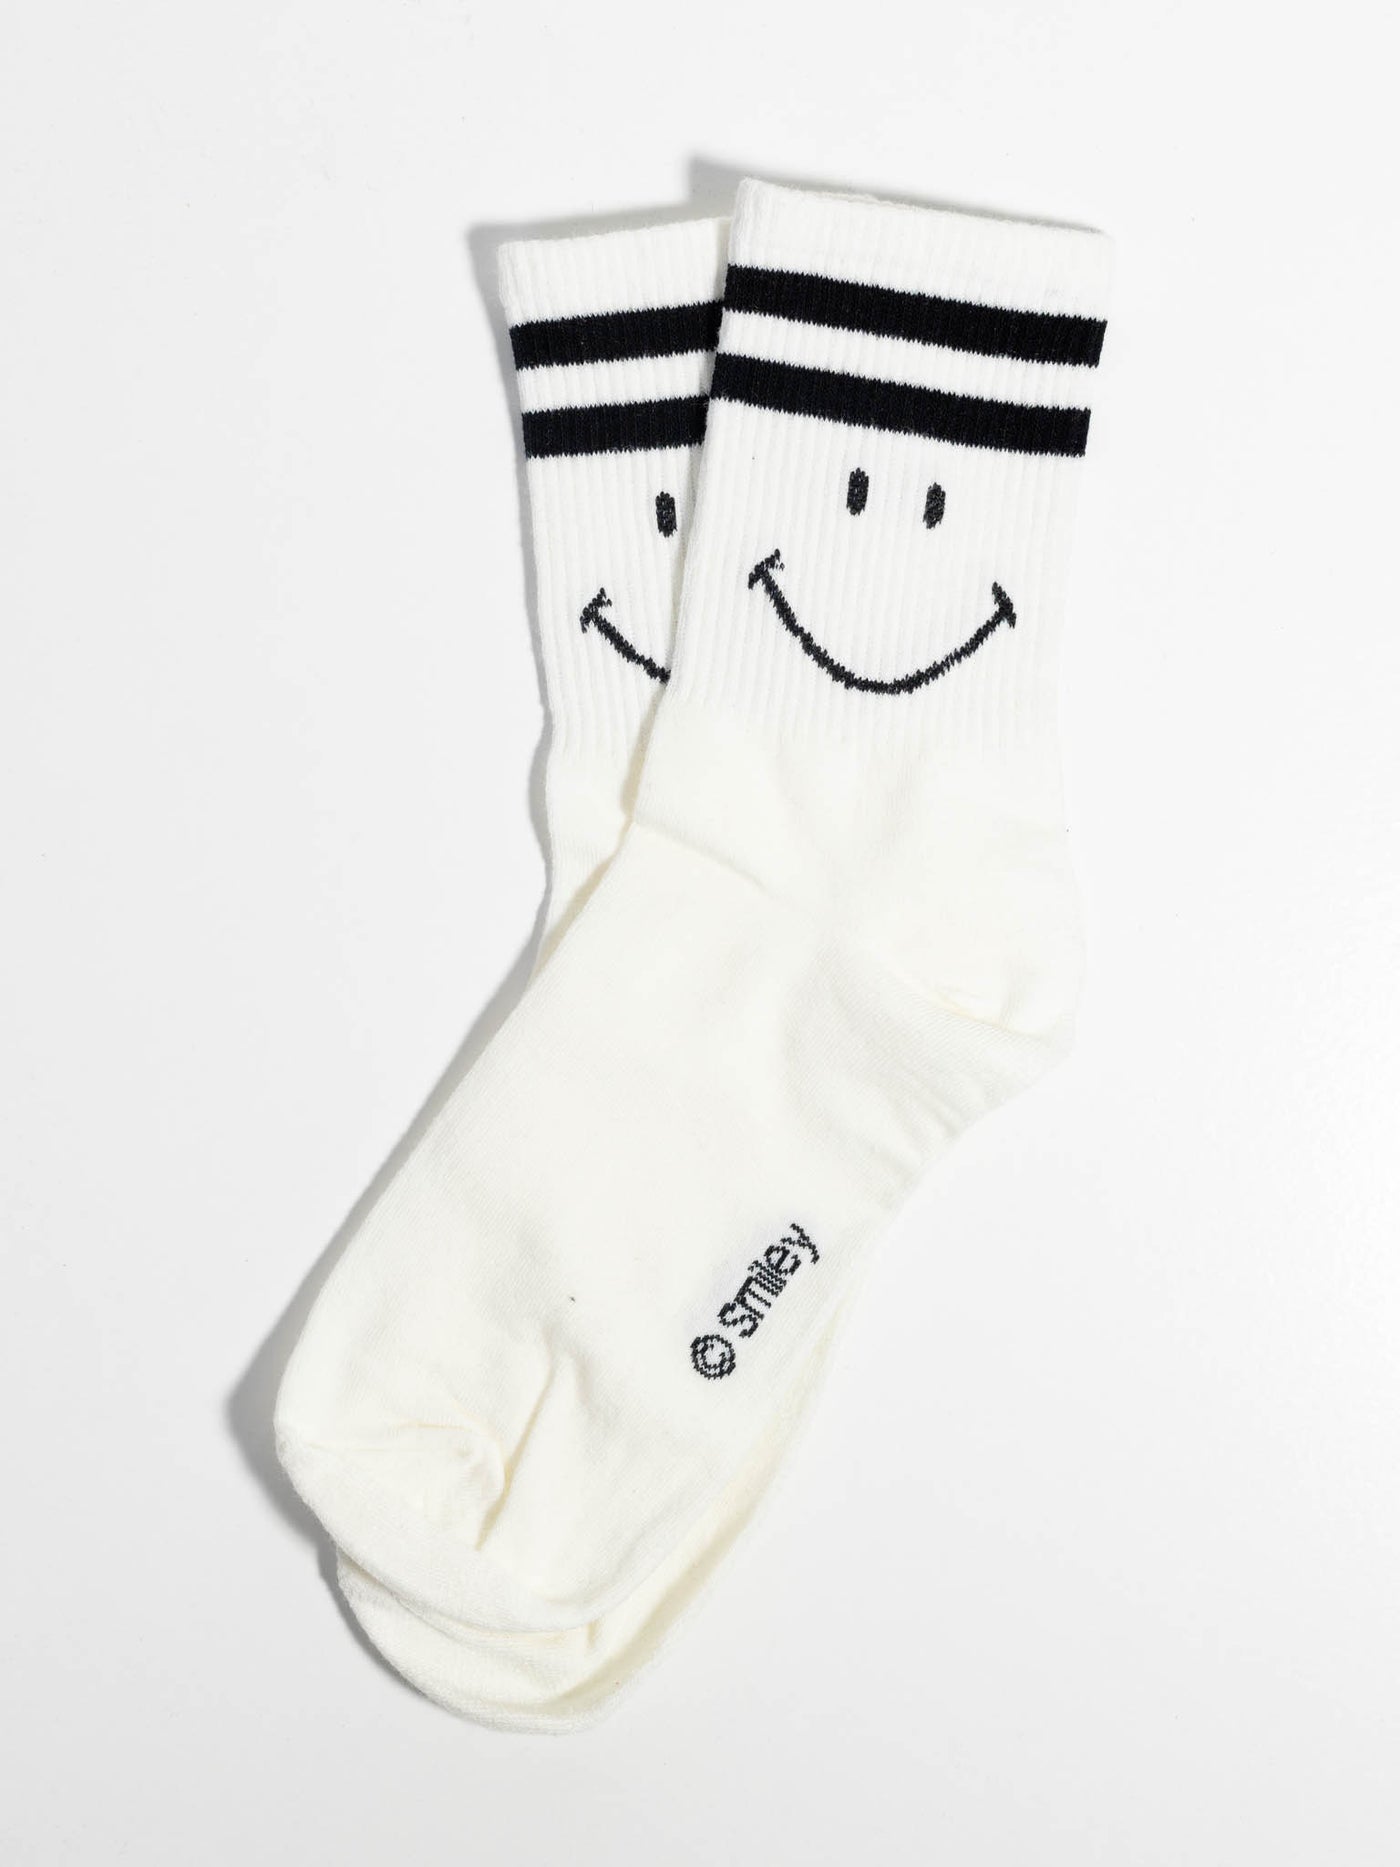 retro smiley socks